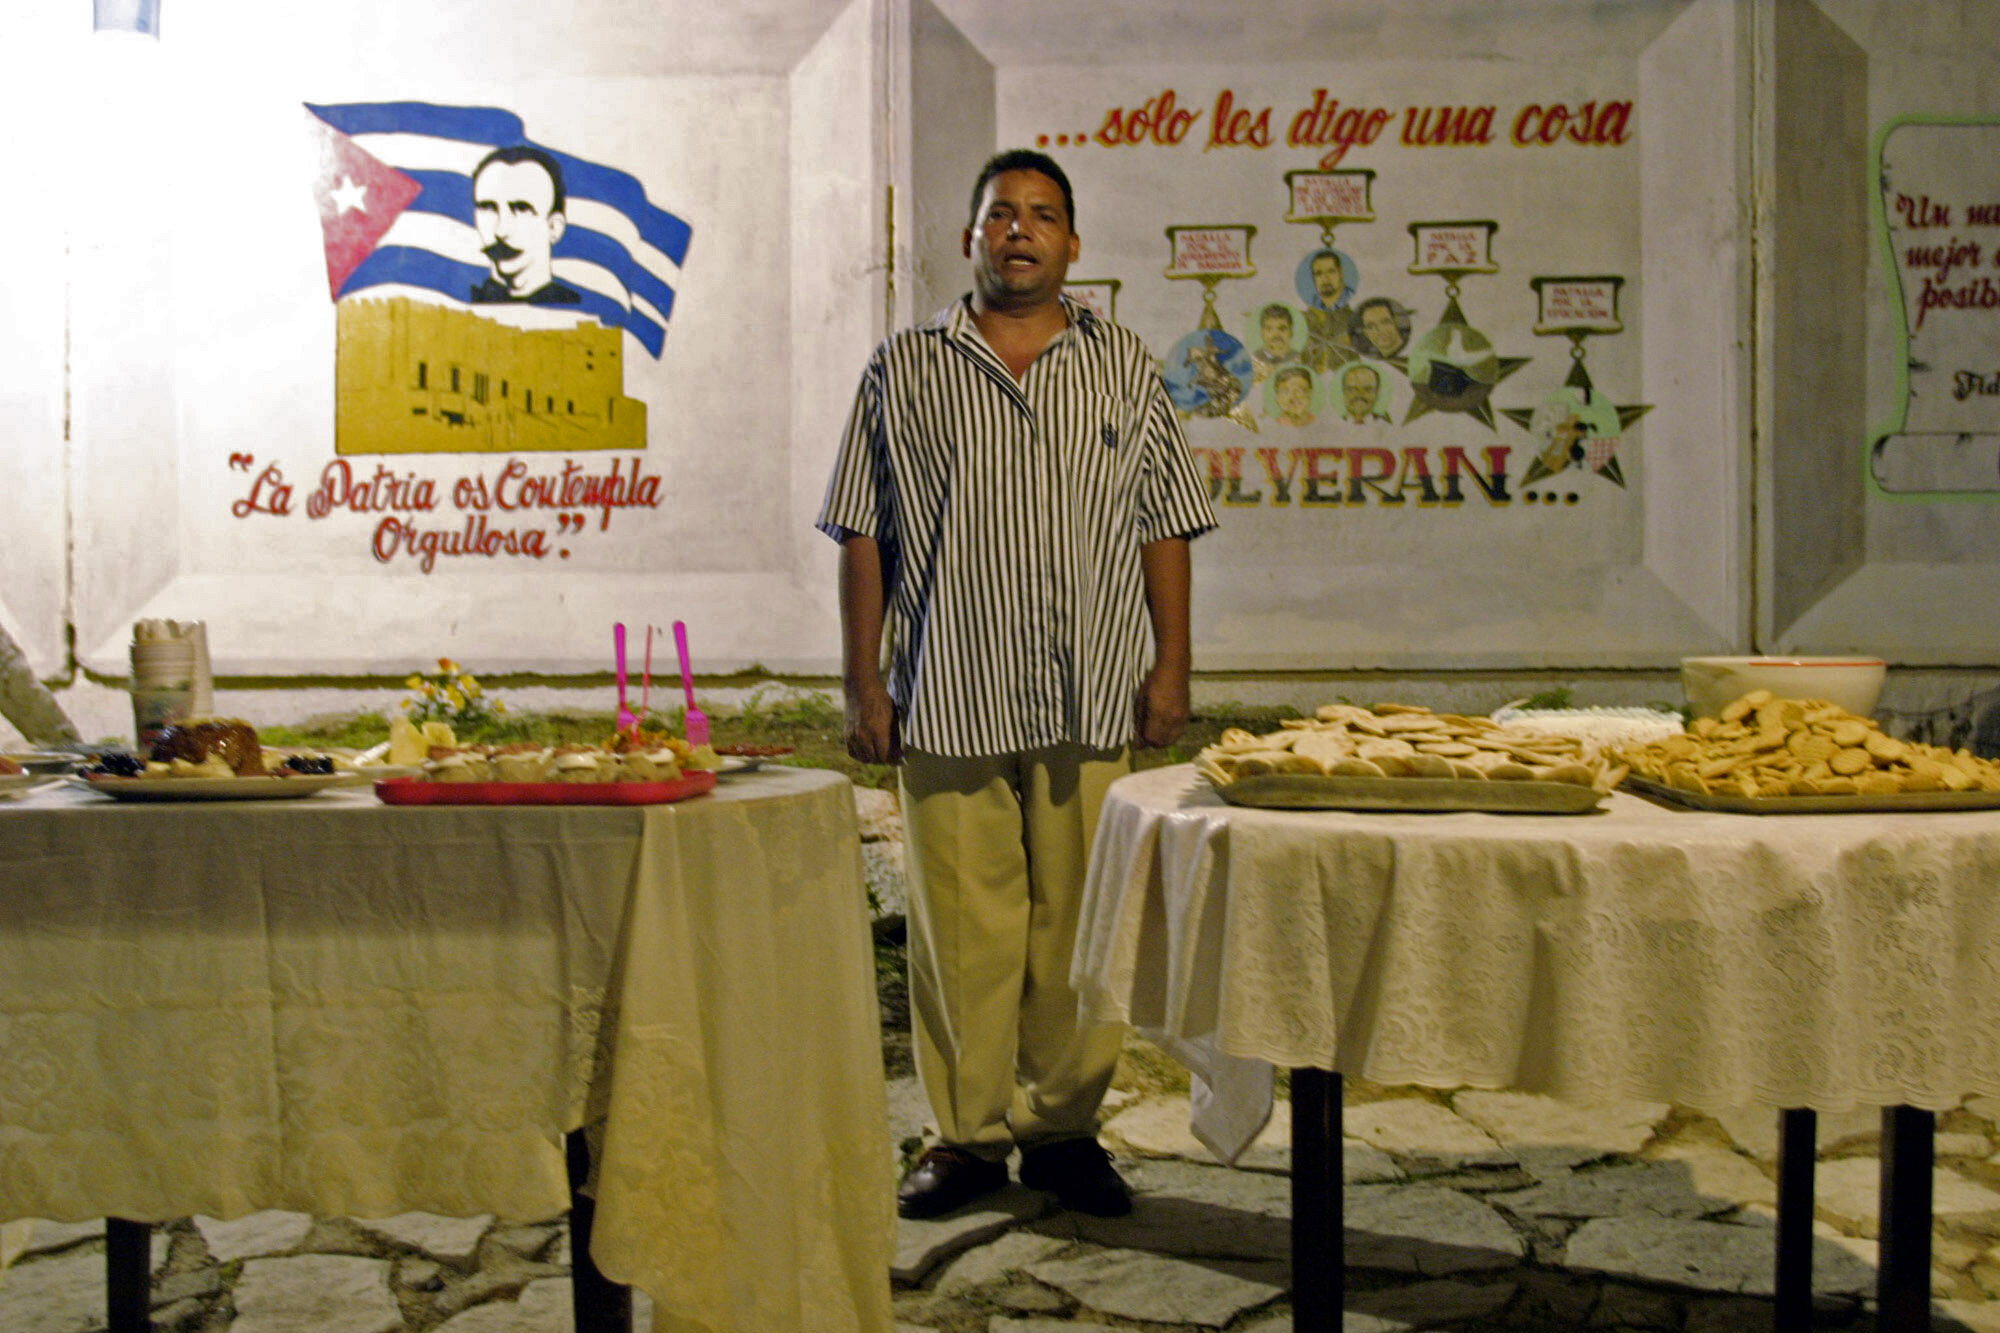  Del Toro, President of the CDR # 1 Ernesto Che Guevara, in Santiago de Cuba, sings the national anthem. 2003.                  